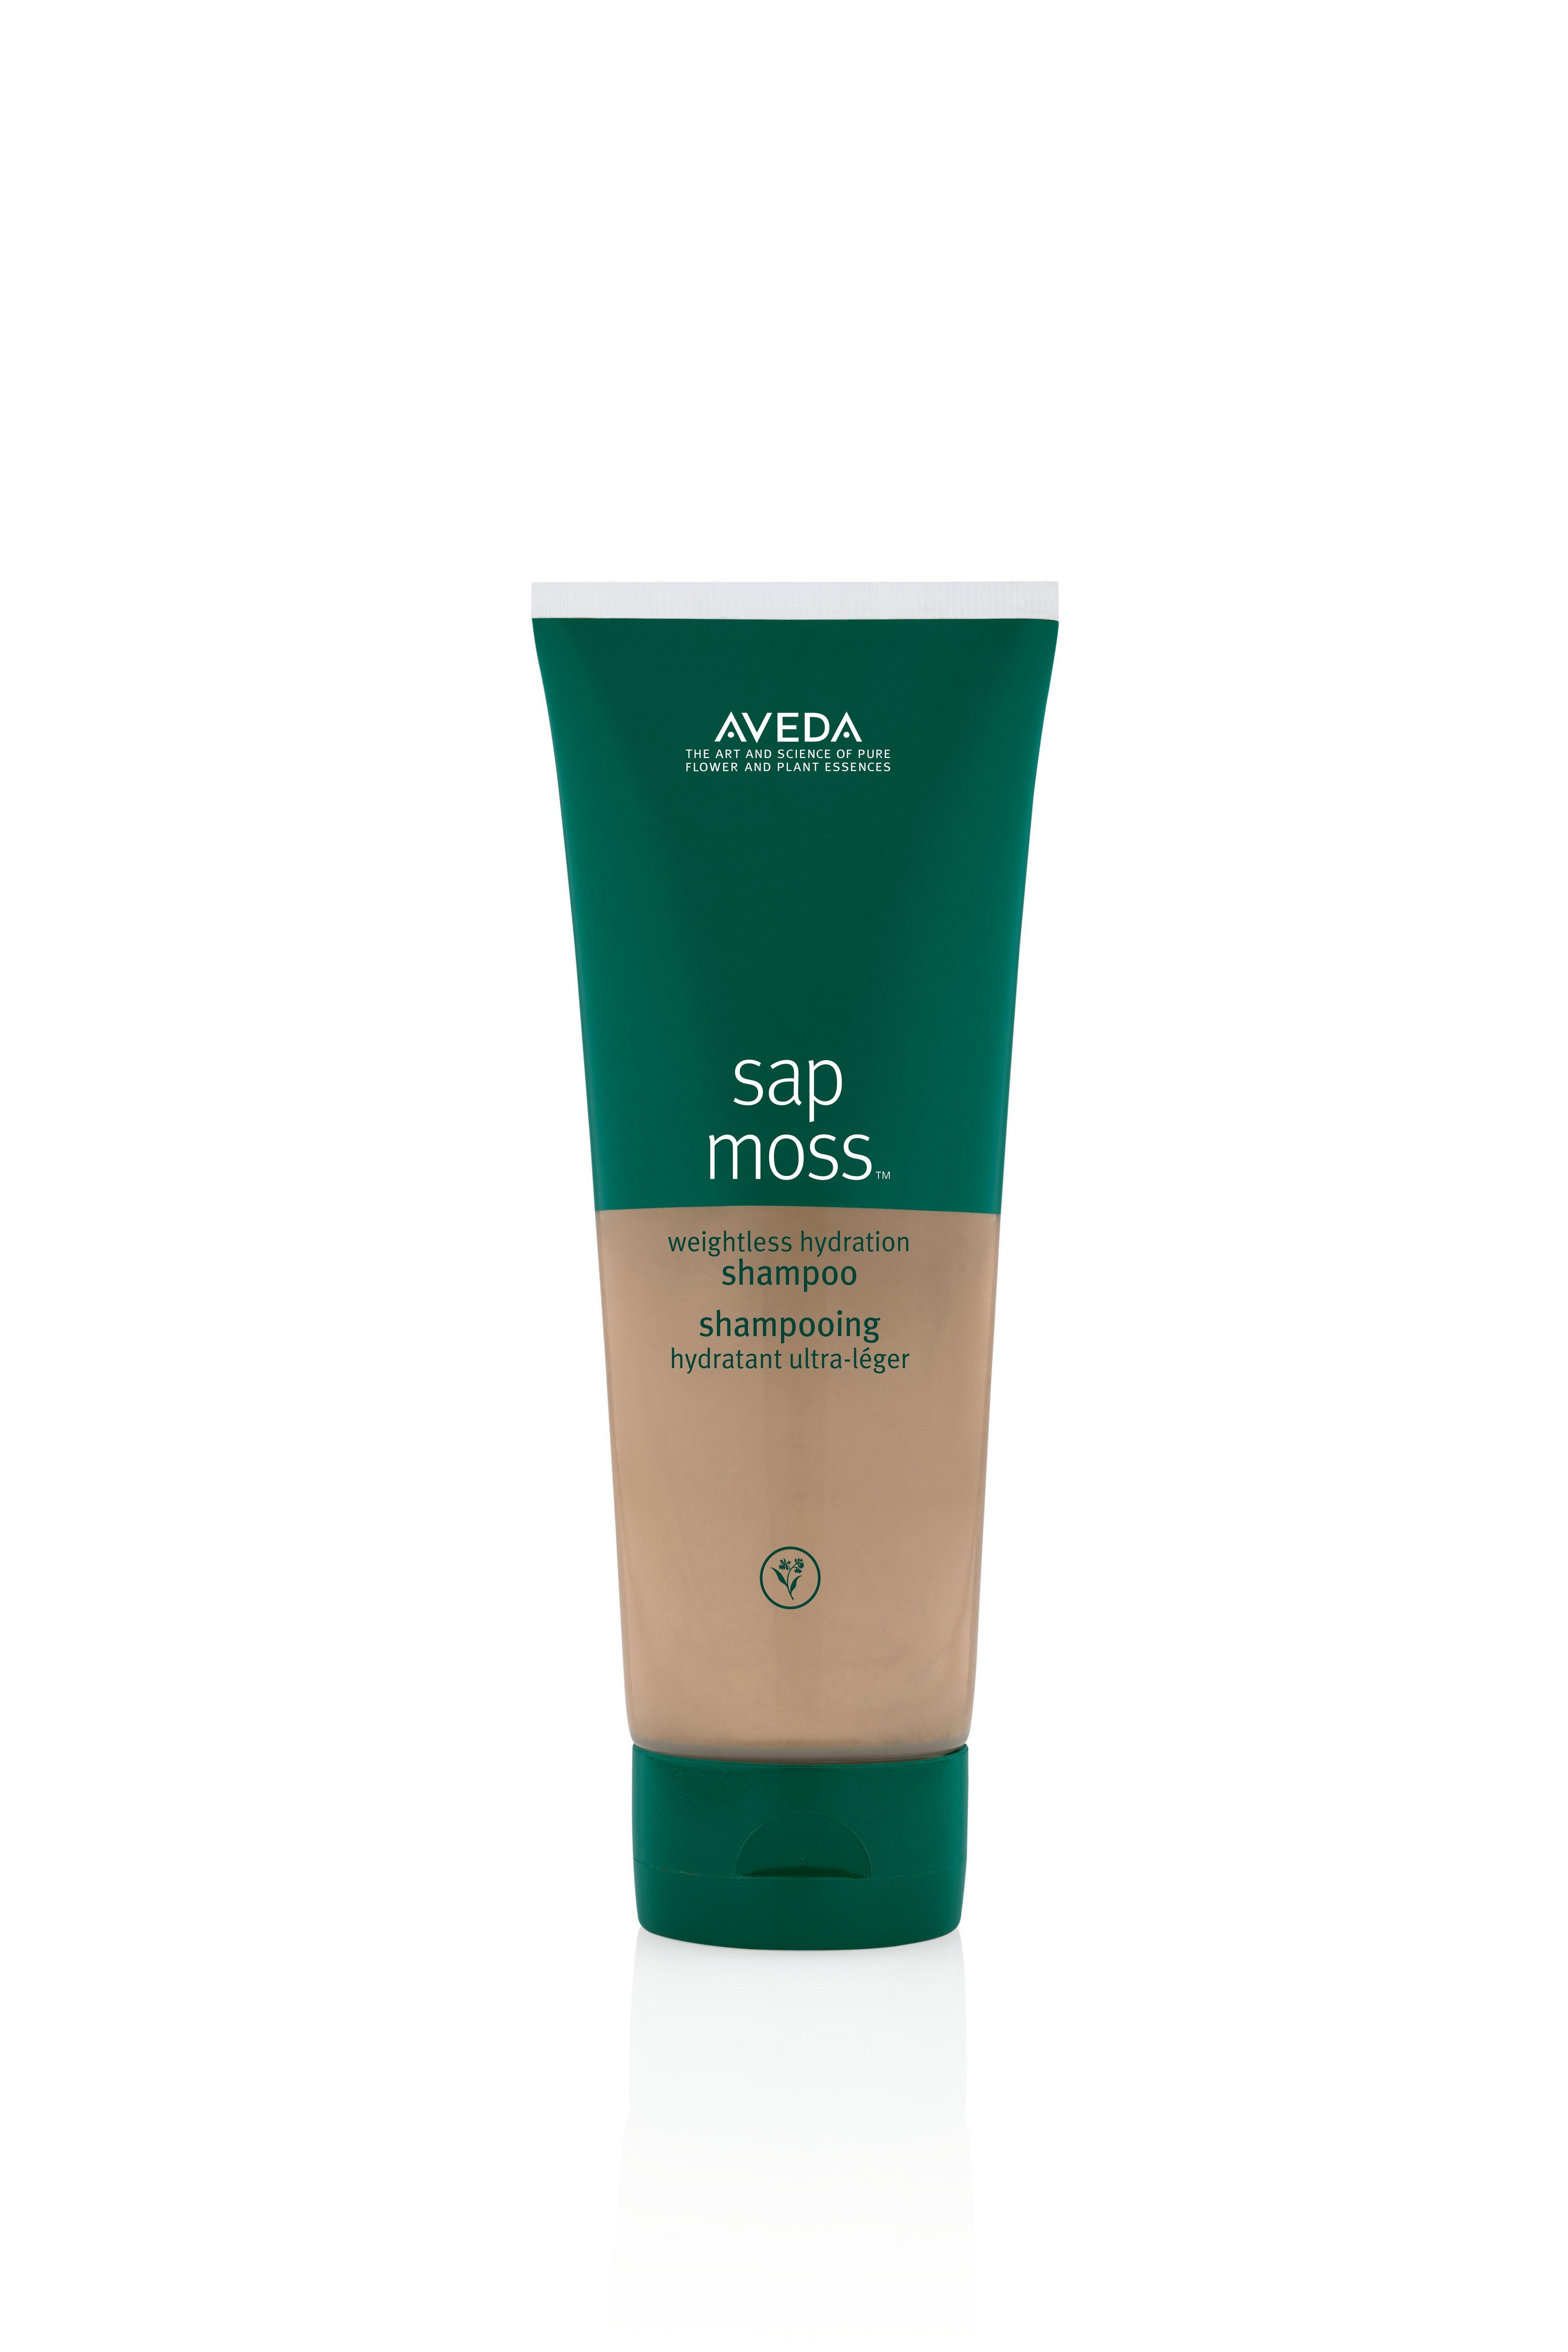 Image of AVEDA Sap Moss Weightless Hydration Shampoo - 200ml